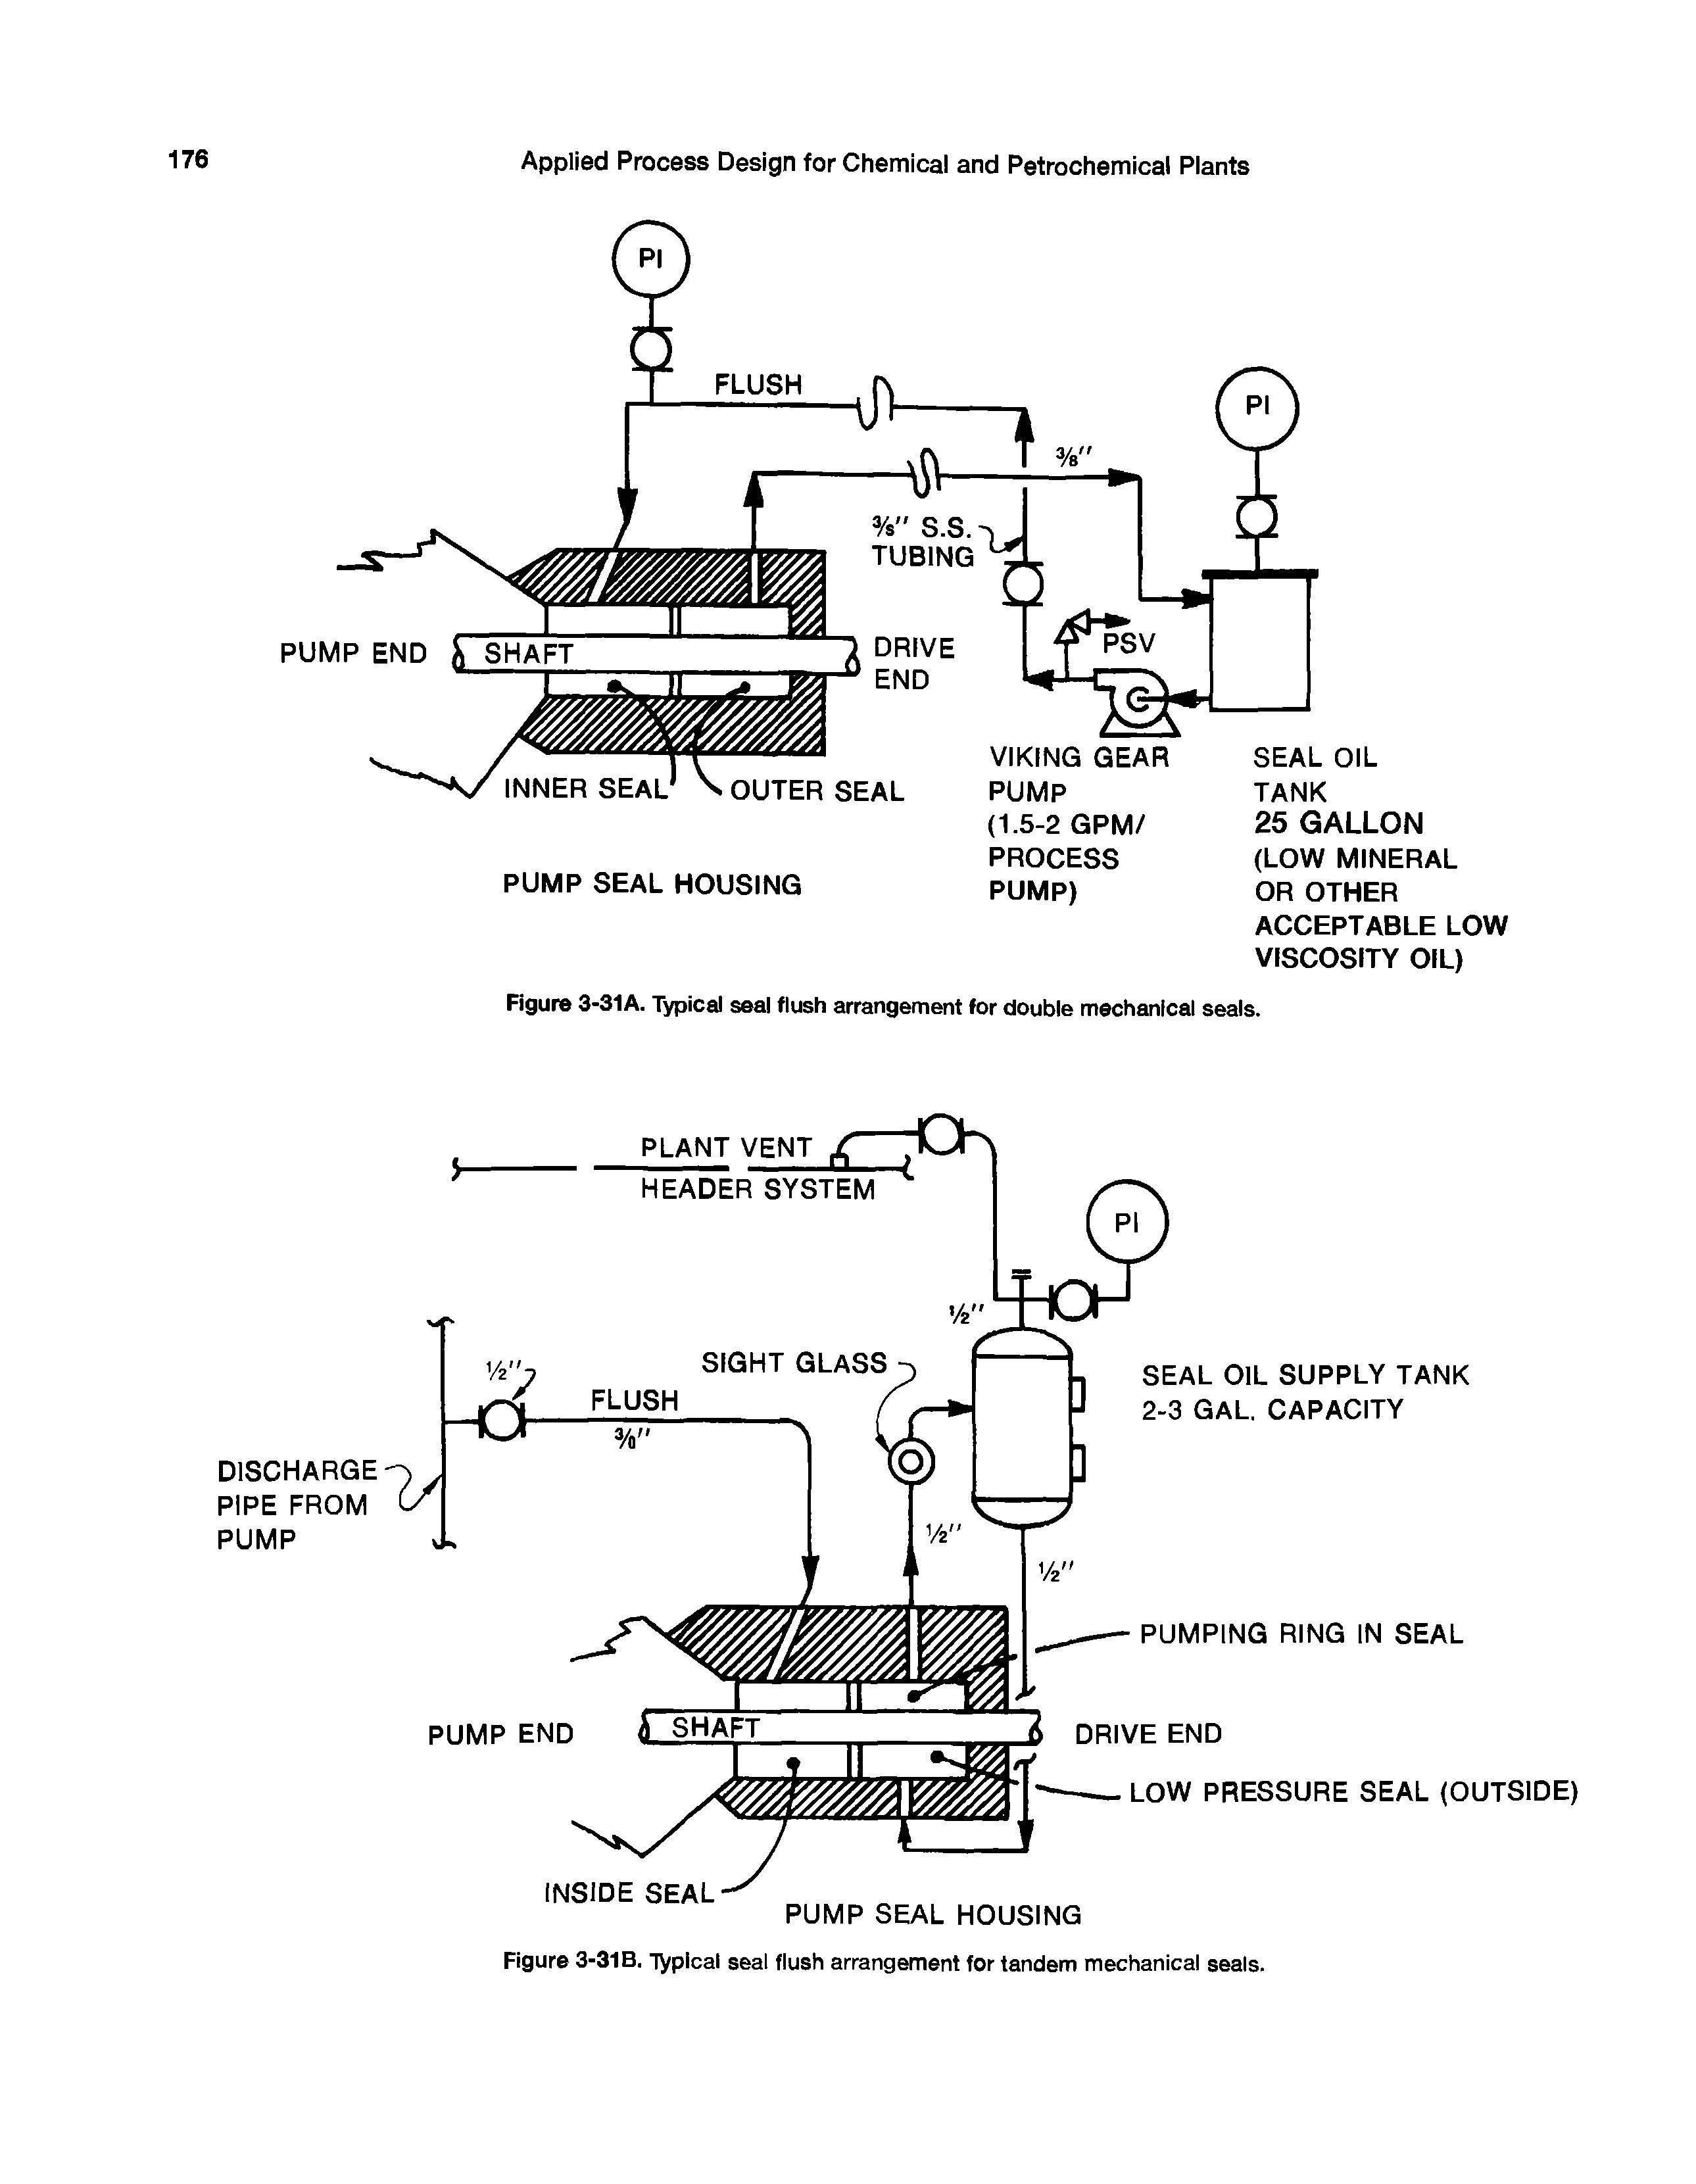 Figure 3-31B. Typical seal flush arrangement for tandem mechanical seals.